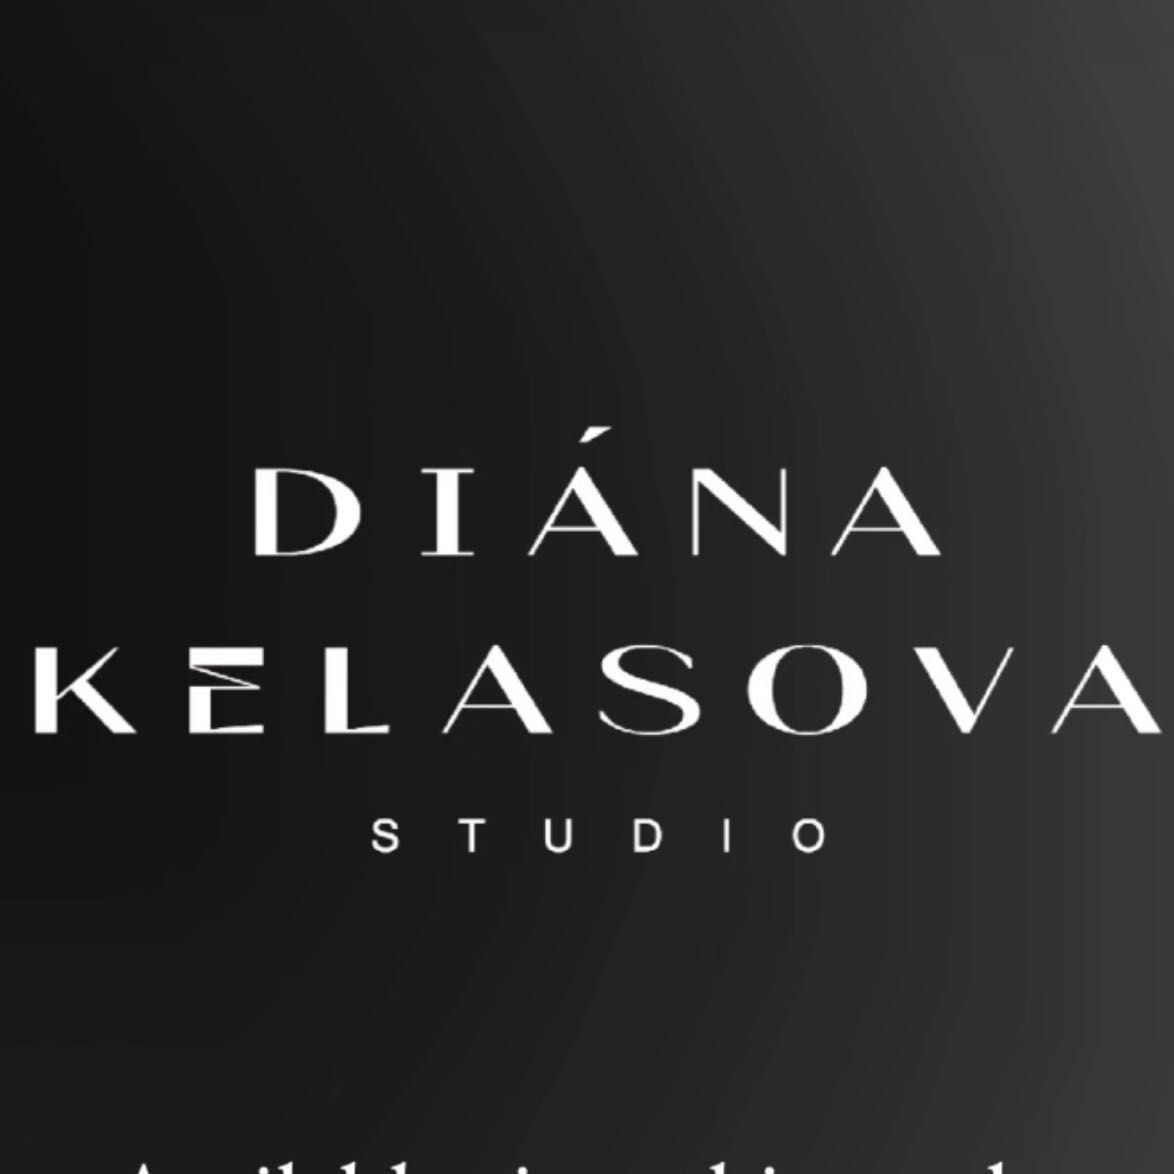 Diana Kelasova studio, 1014 Mill Creek Dr, Additional parking, Feasterville-Trevose, 19053